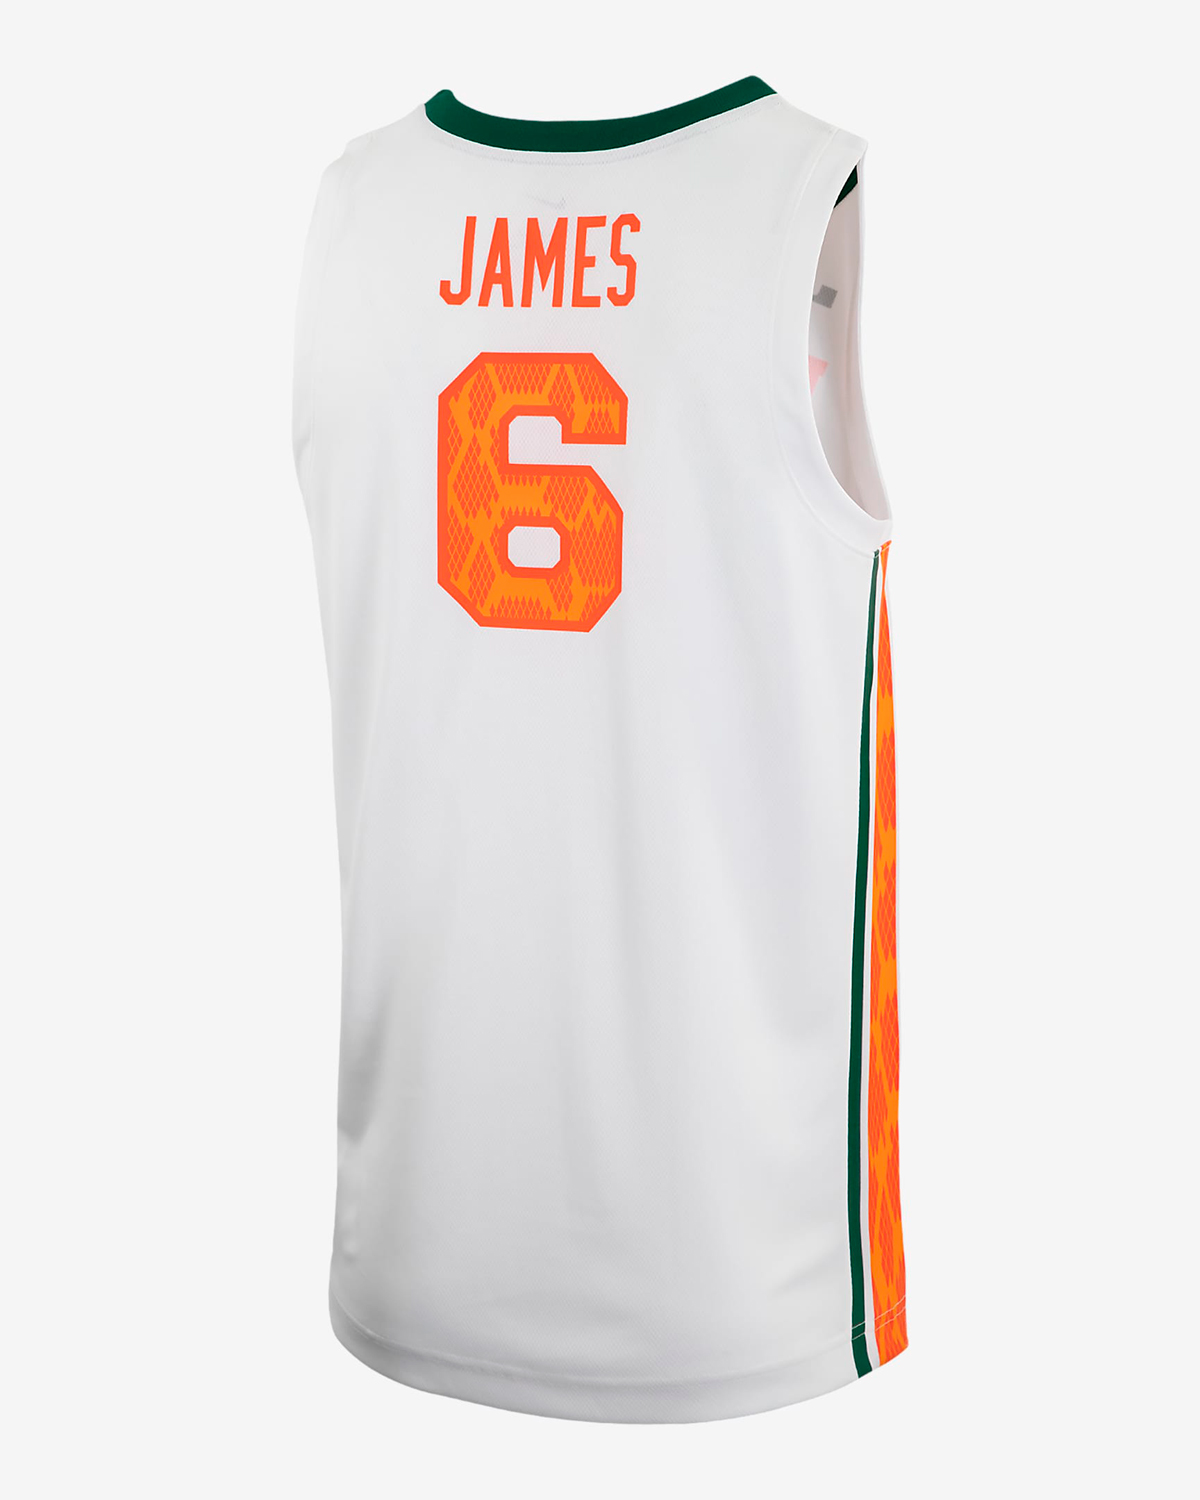 Nike-FAMU-Florida-AM-LeBron-James-Jersey-2